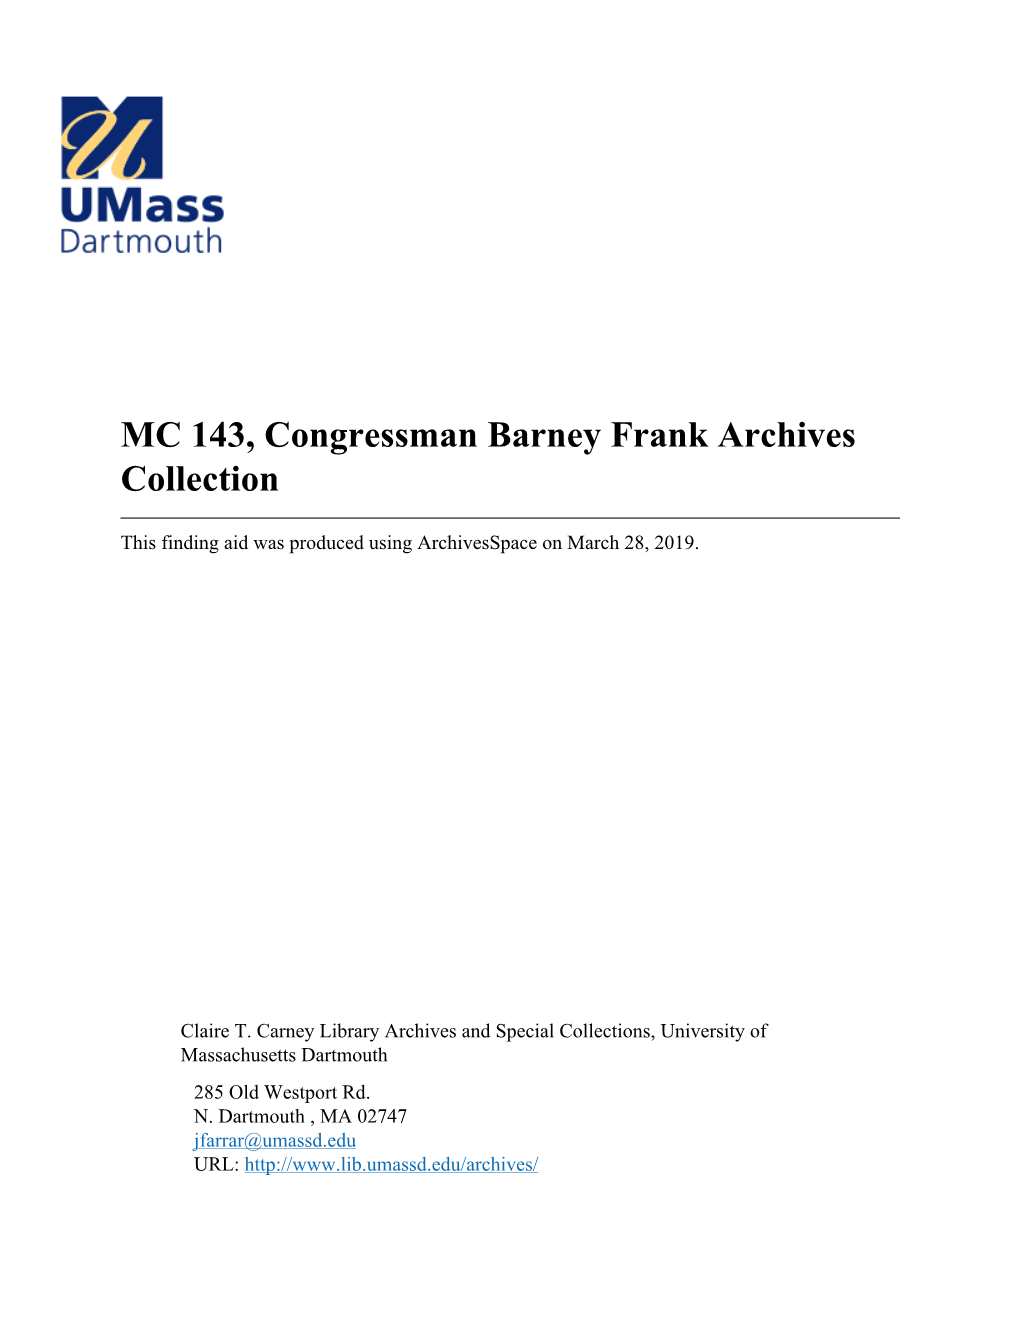 MC 143, Congressman Barney Frank Archives Collection